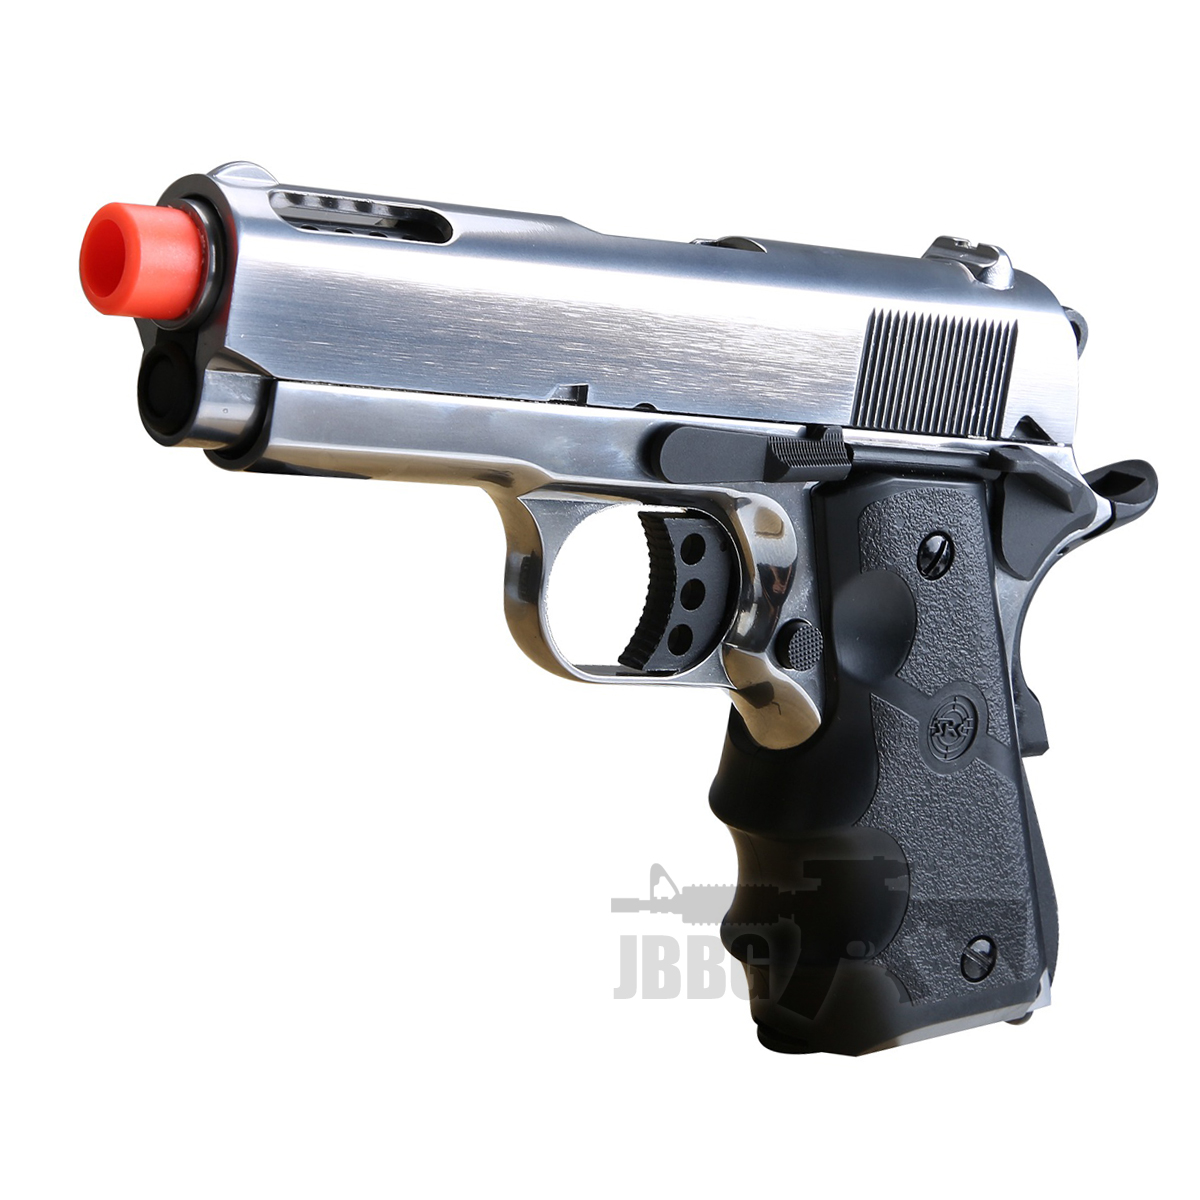 GB-0740SX-pistol-1